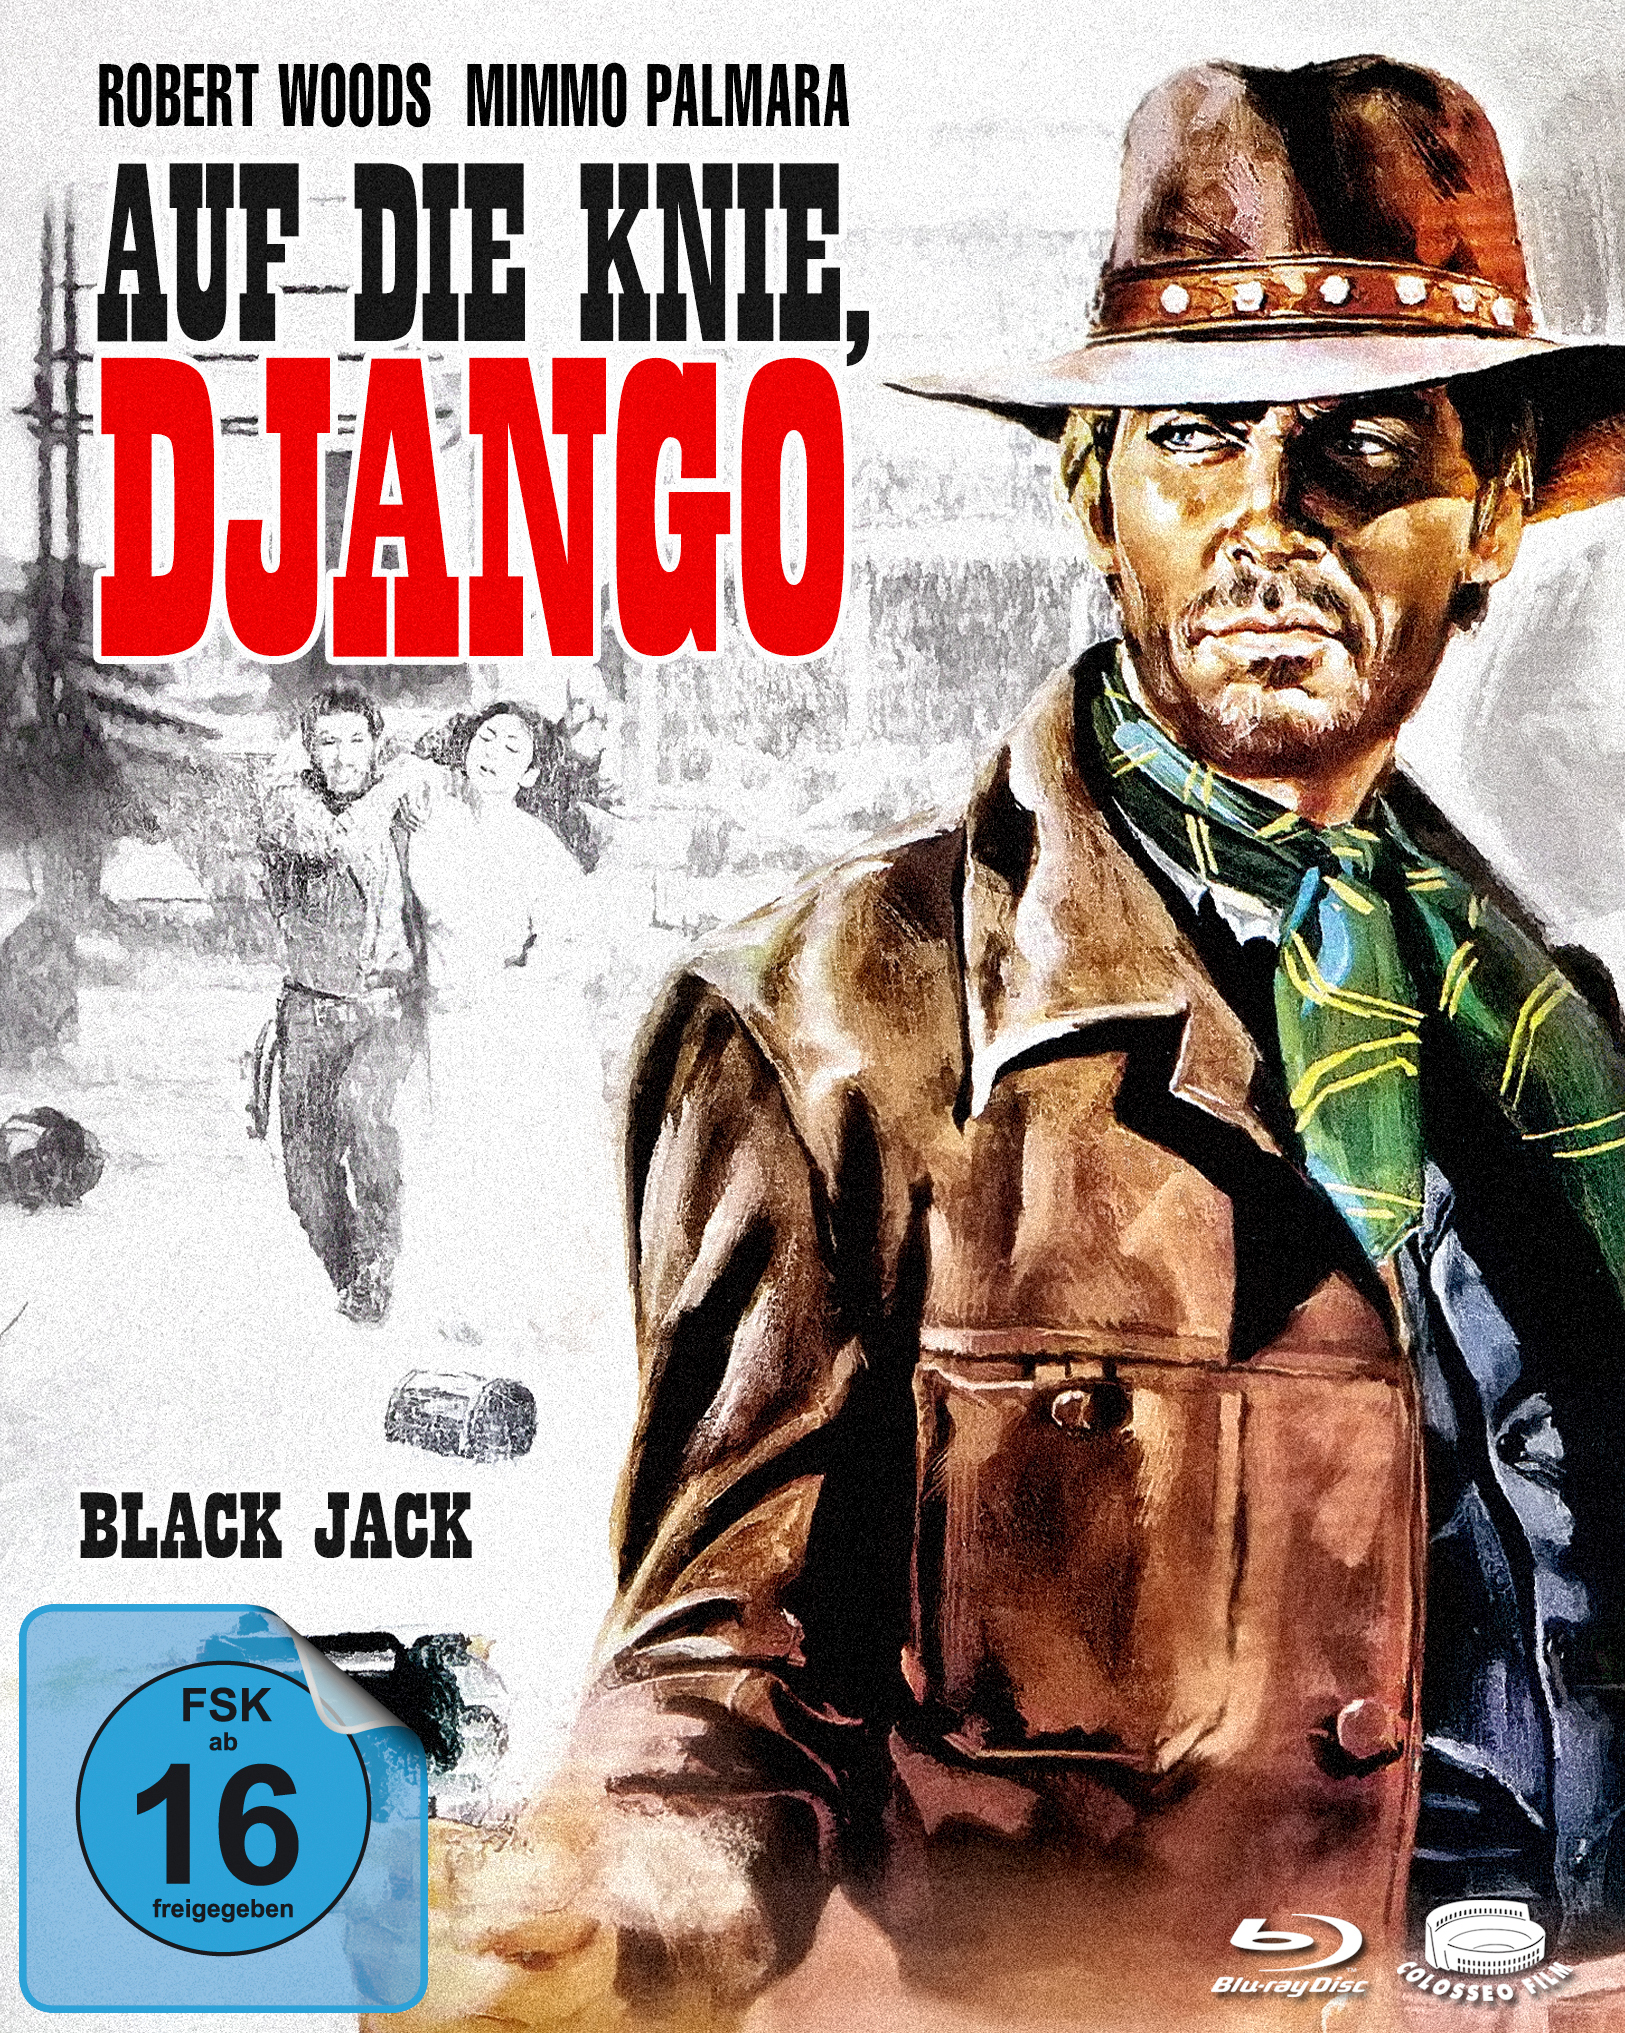 Black Jack Blu Ray Release Date February 1 19 Auf Die Knie Django Germany